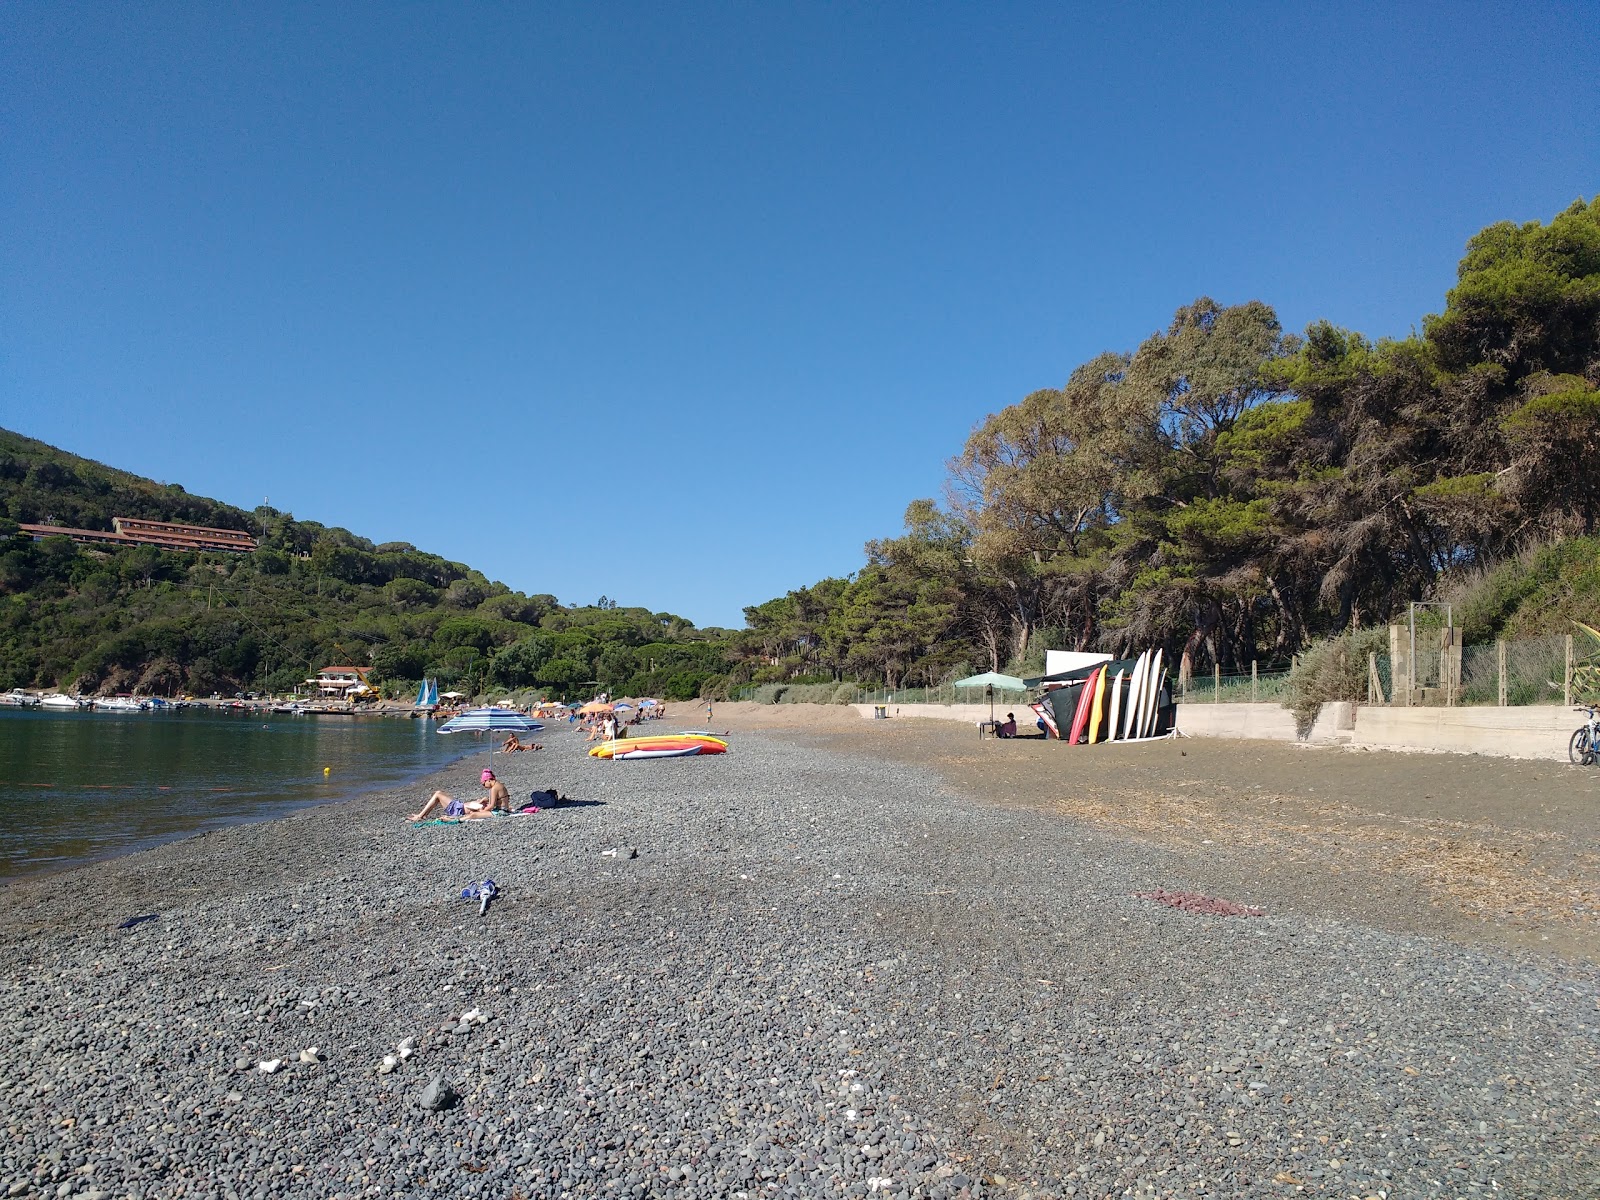 Fotografija Margidore beach z sivi kamenček površino